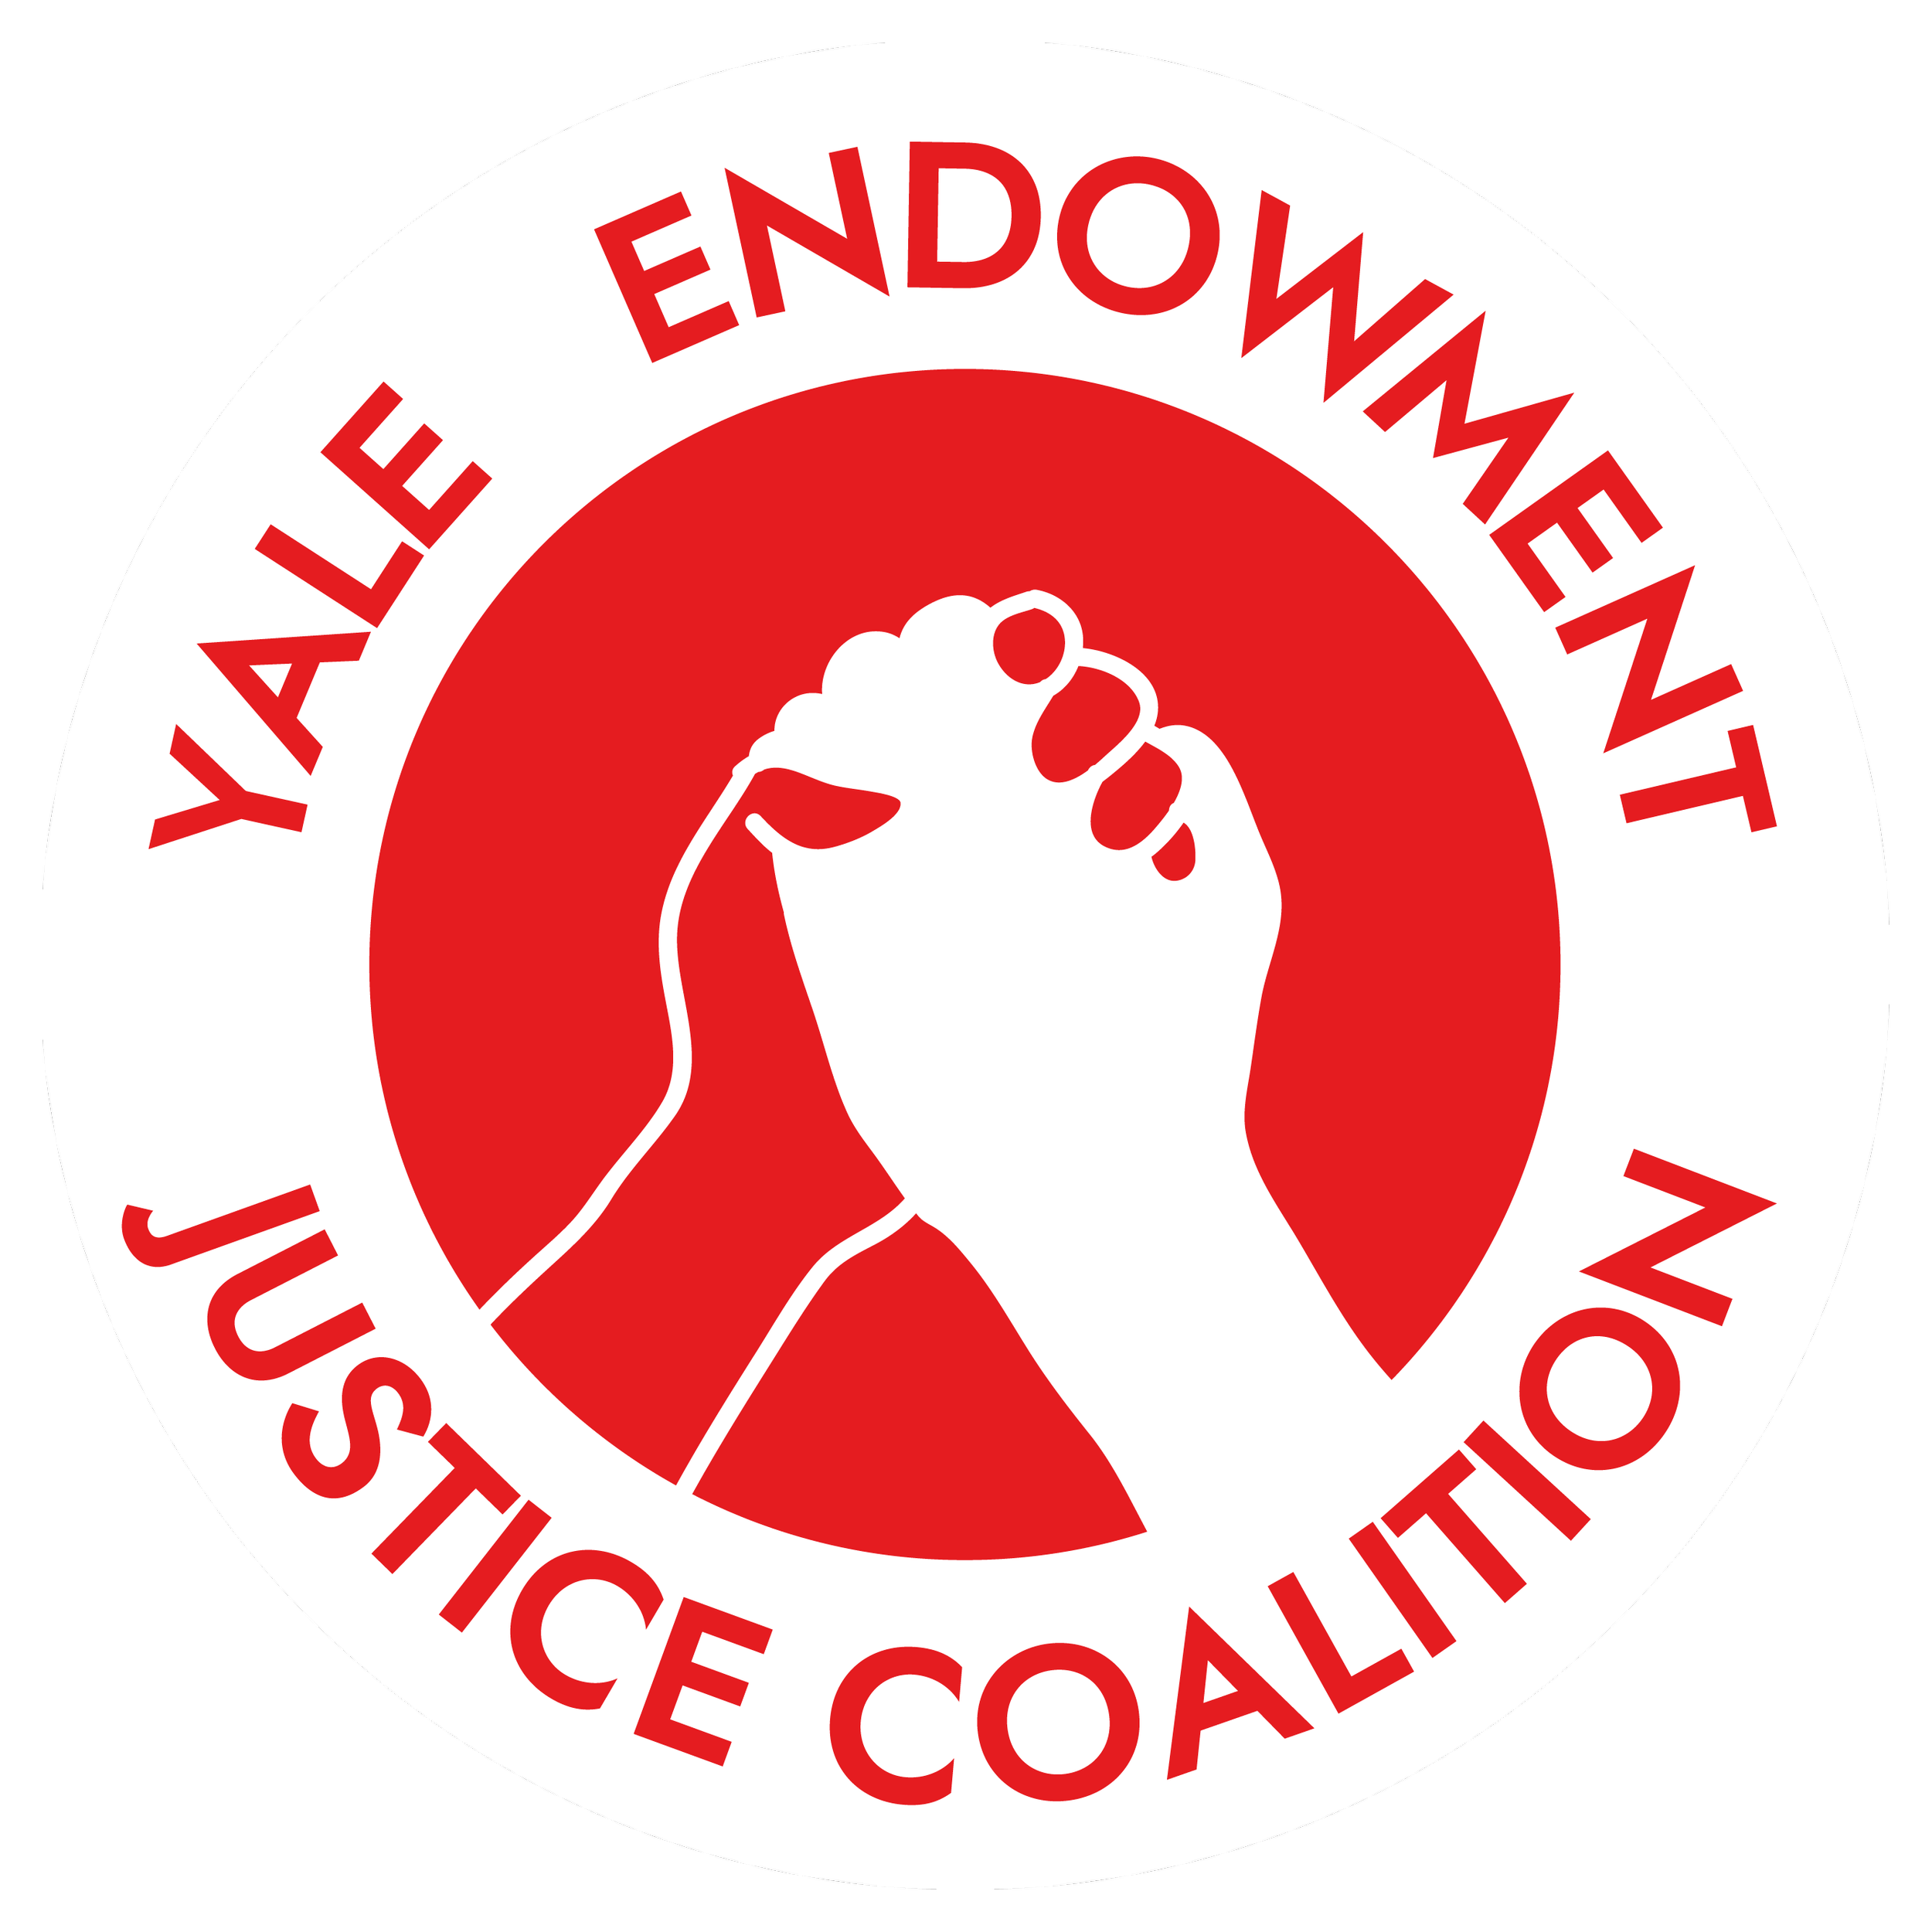 Yale Endowment Justice Coalition